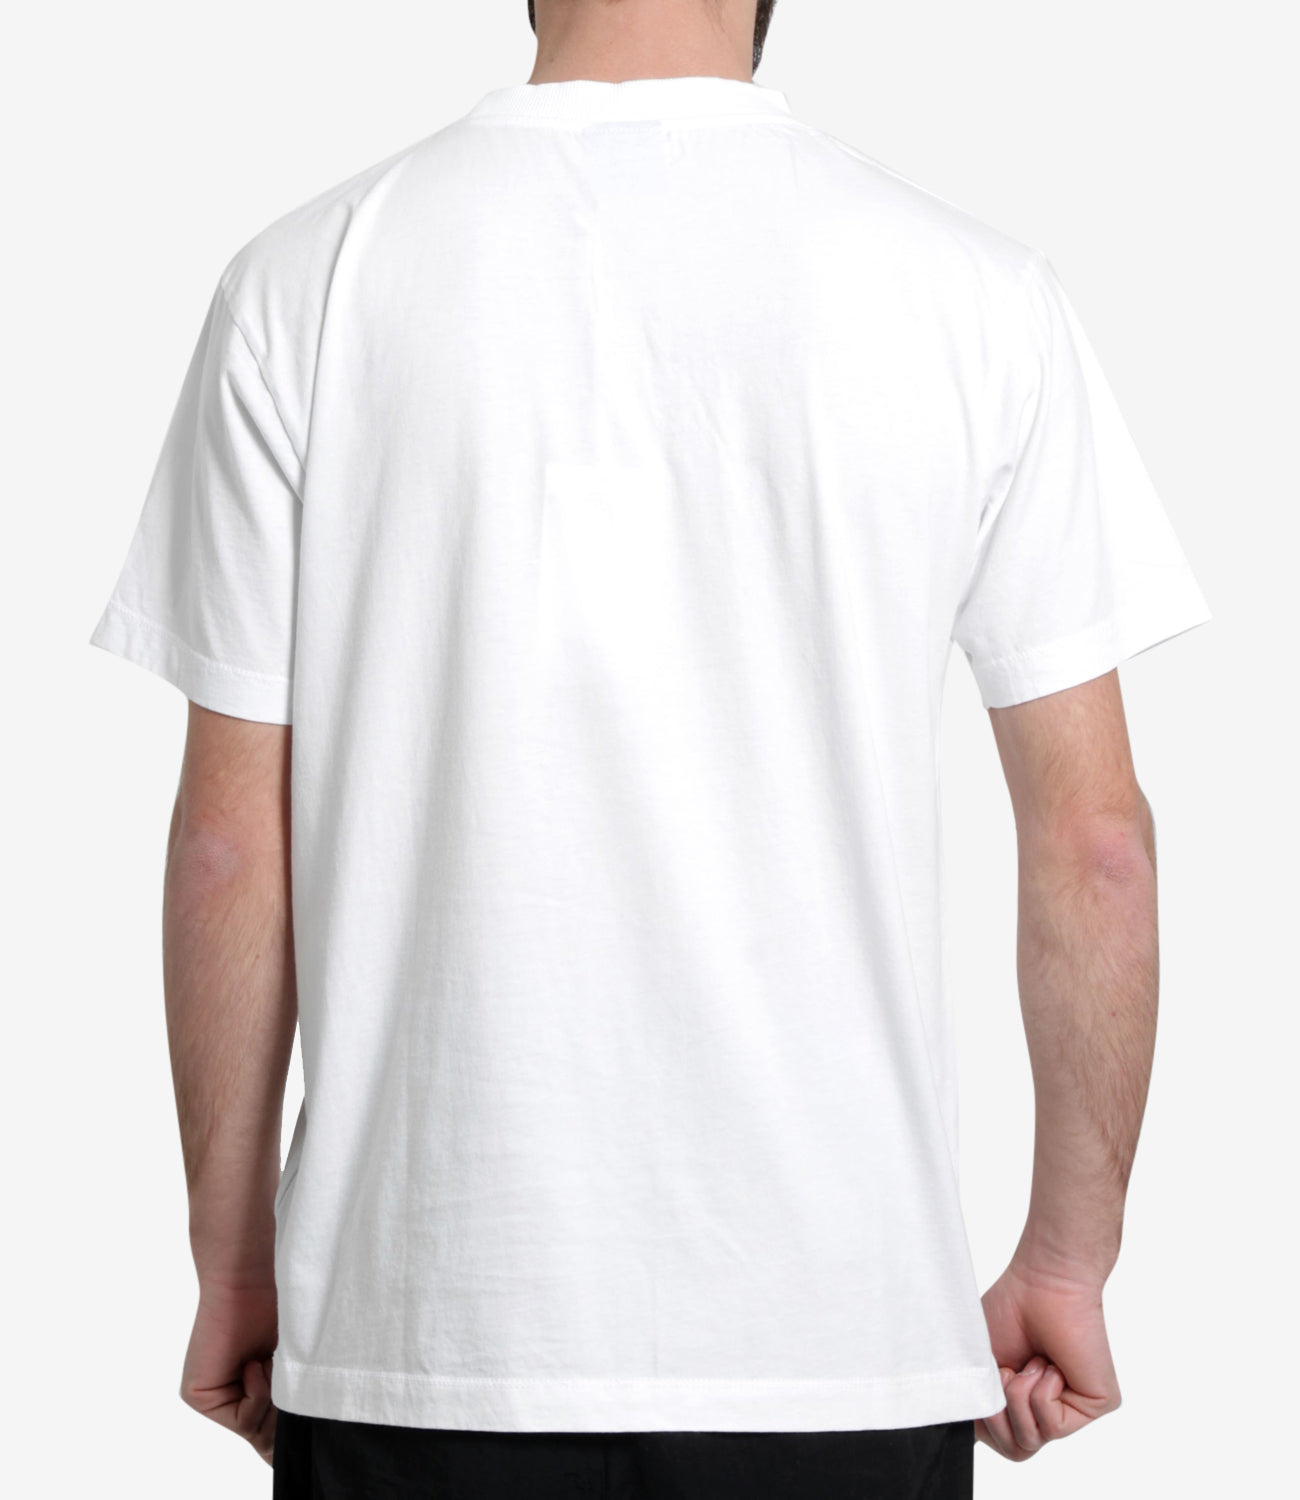 Marcelo Burlon | T-Shirt Cross Bianco e Rosso